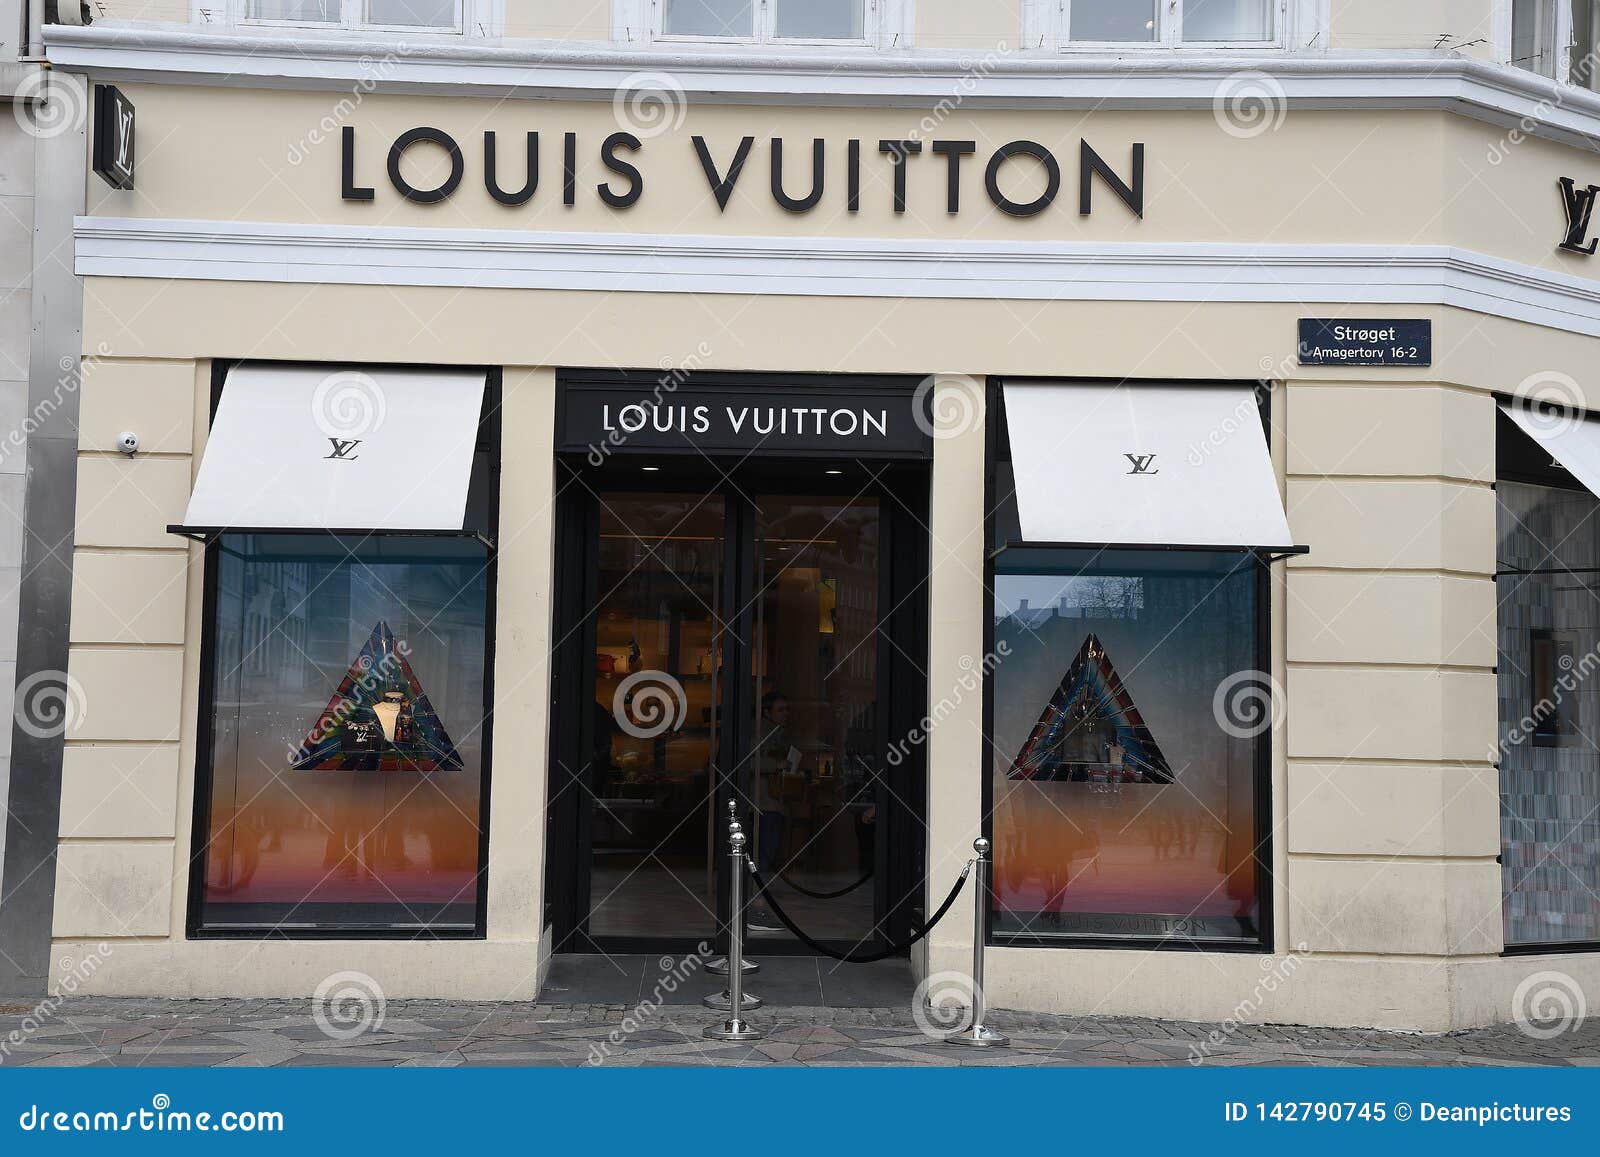 French Luxury Lois Vuitton Store in Copenhagen Denmark Editorial Image - Image copenhagen, store: 142790745